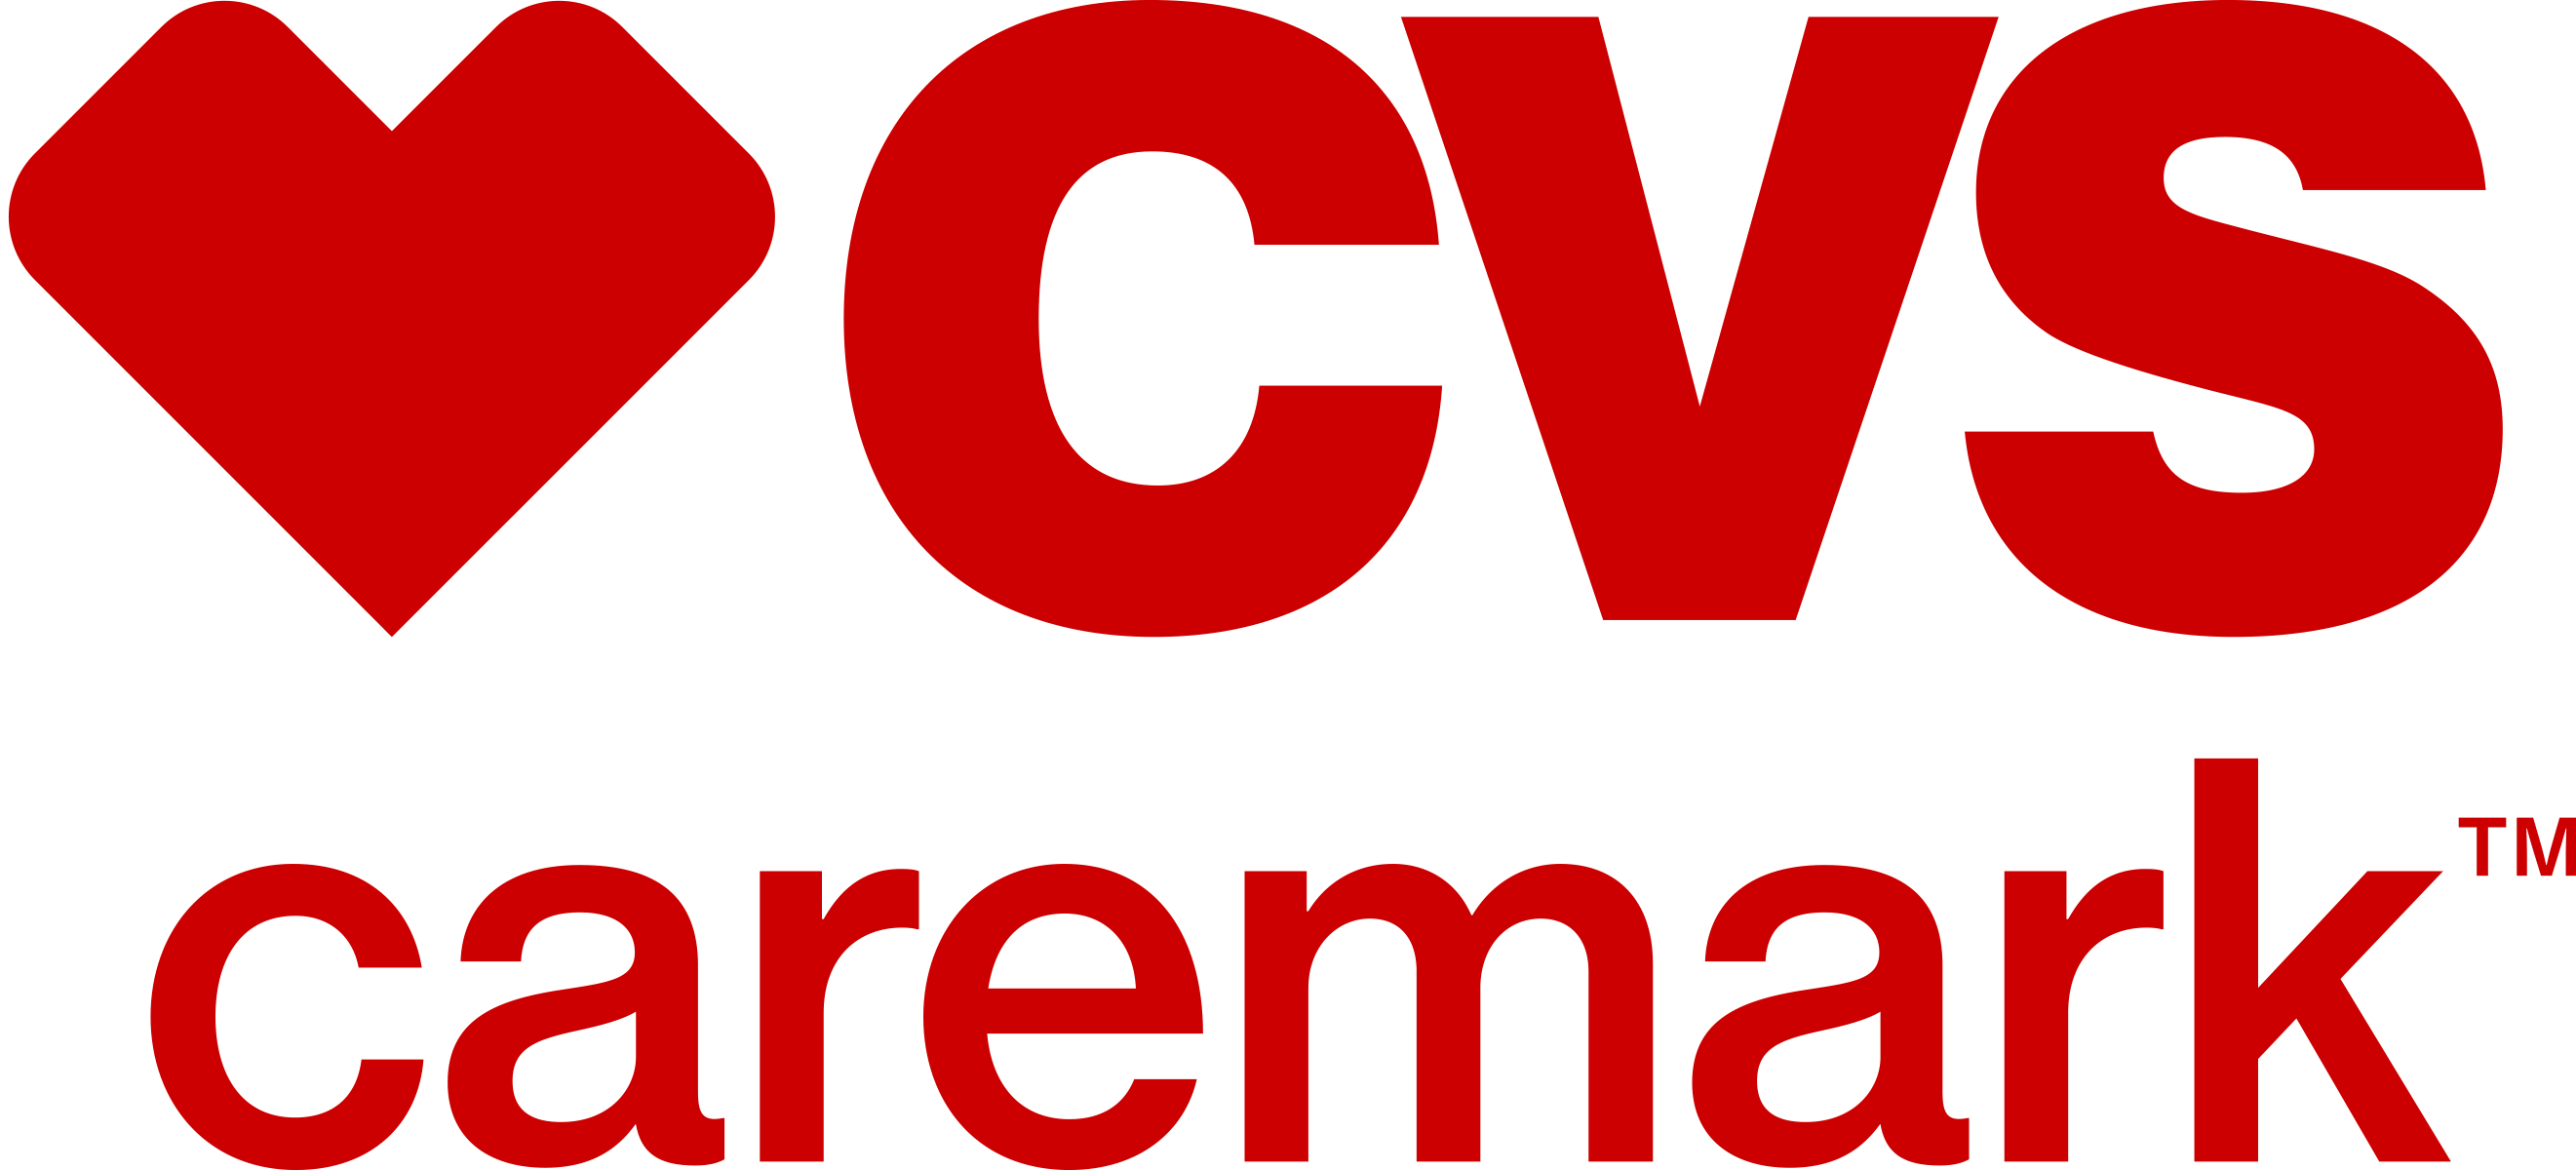 CVS Caremark Logo Stacked